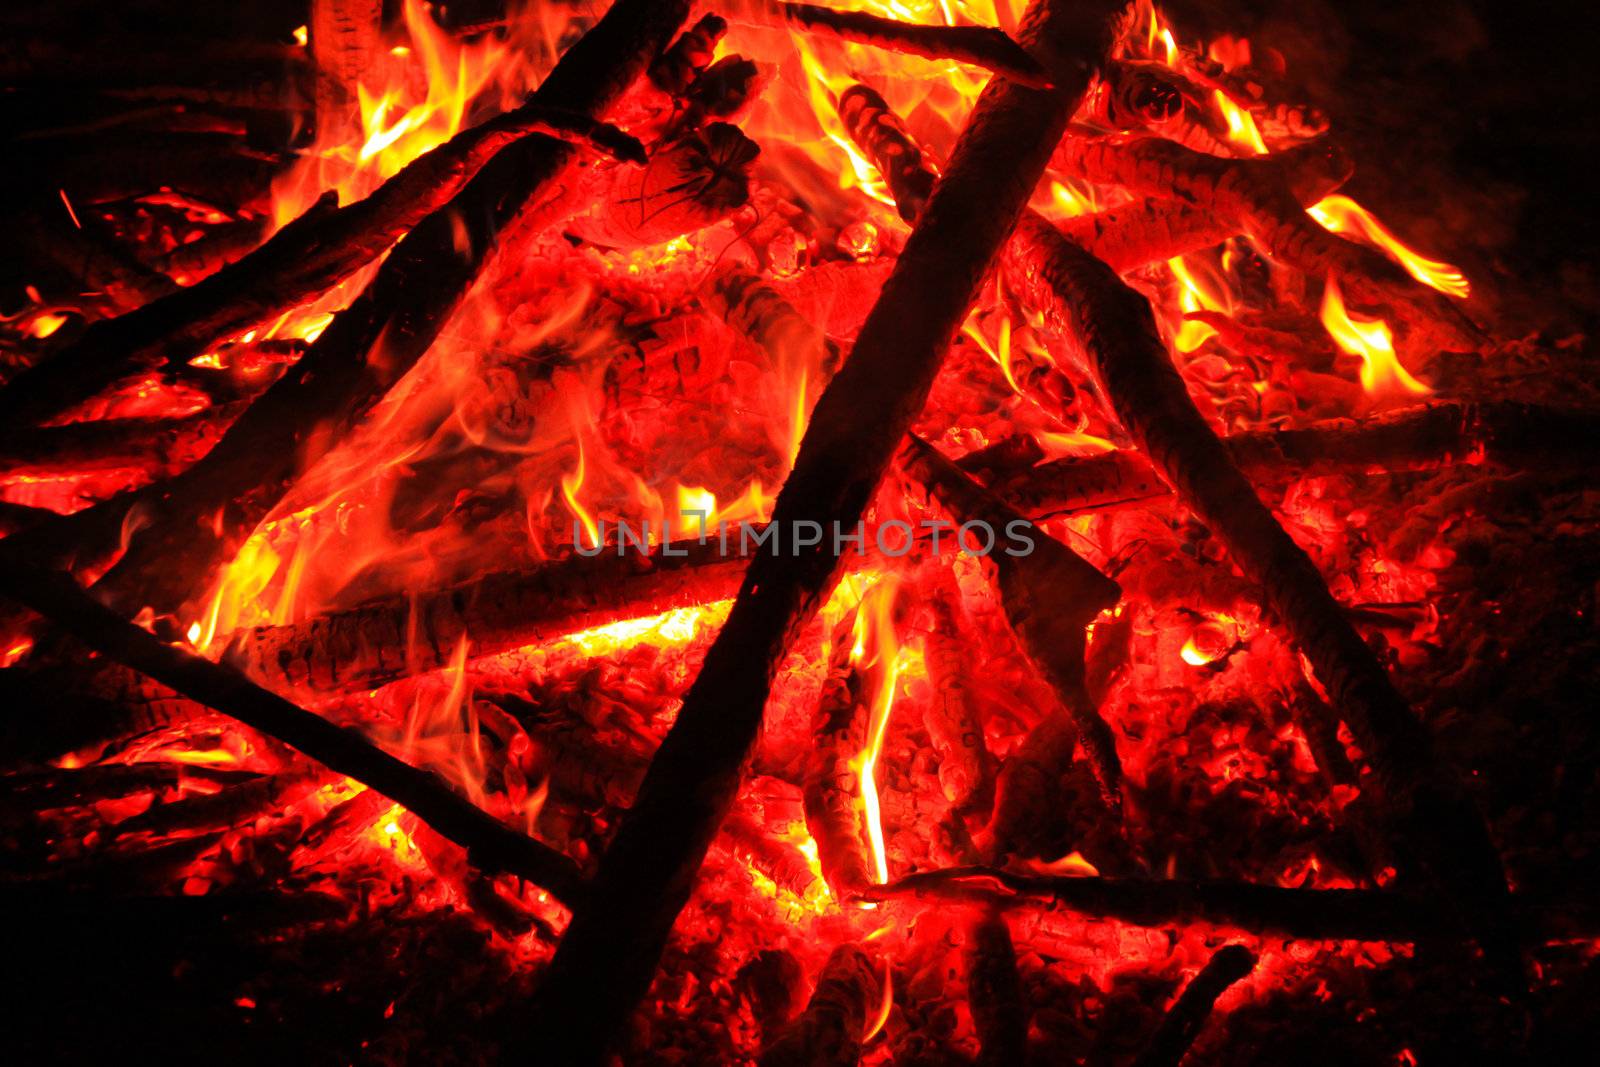 Sizzling campfire by renegadewanderer